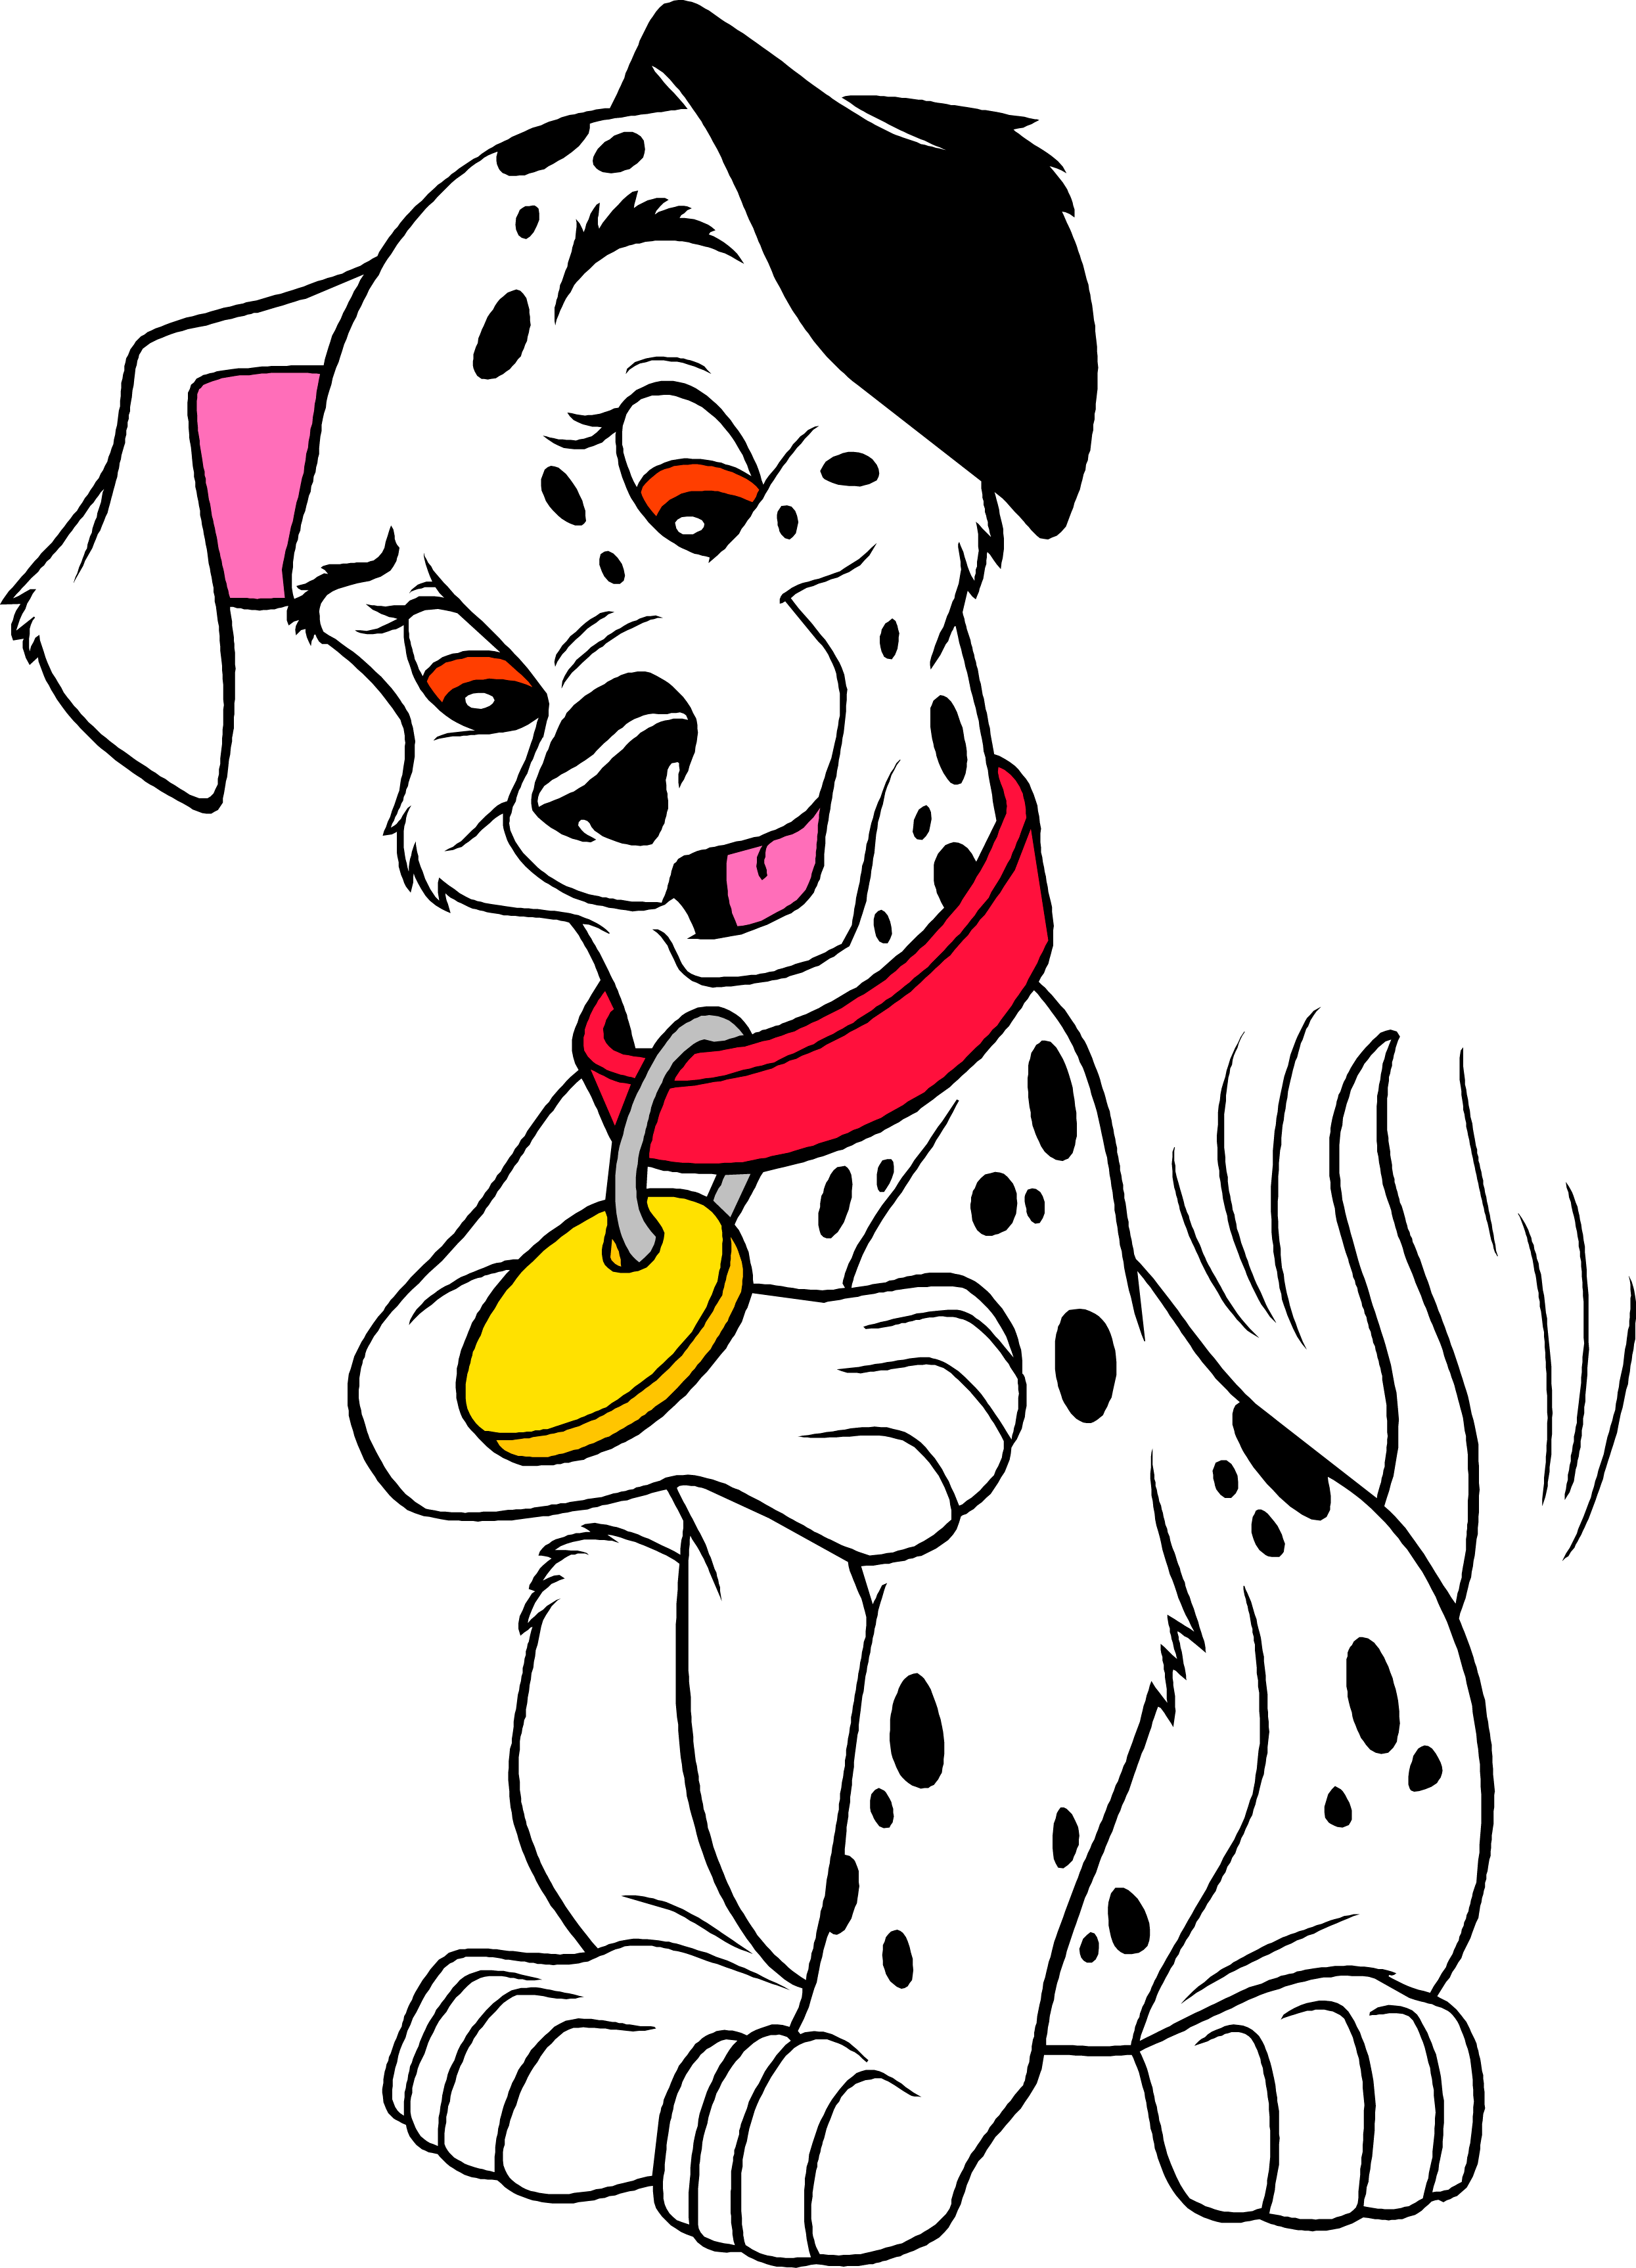 A Cartoon Of A Dog With A Collar